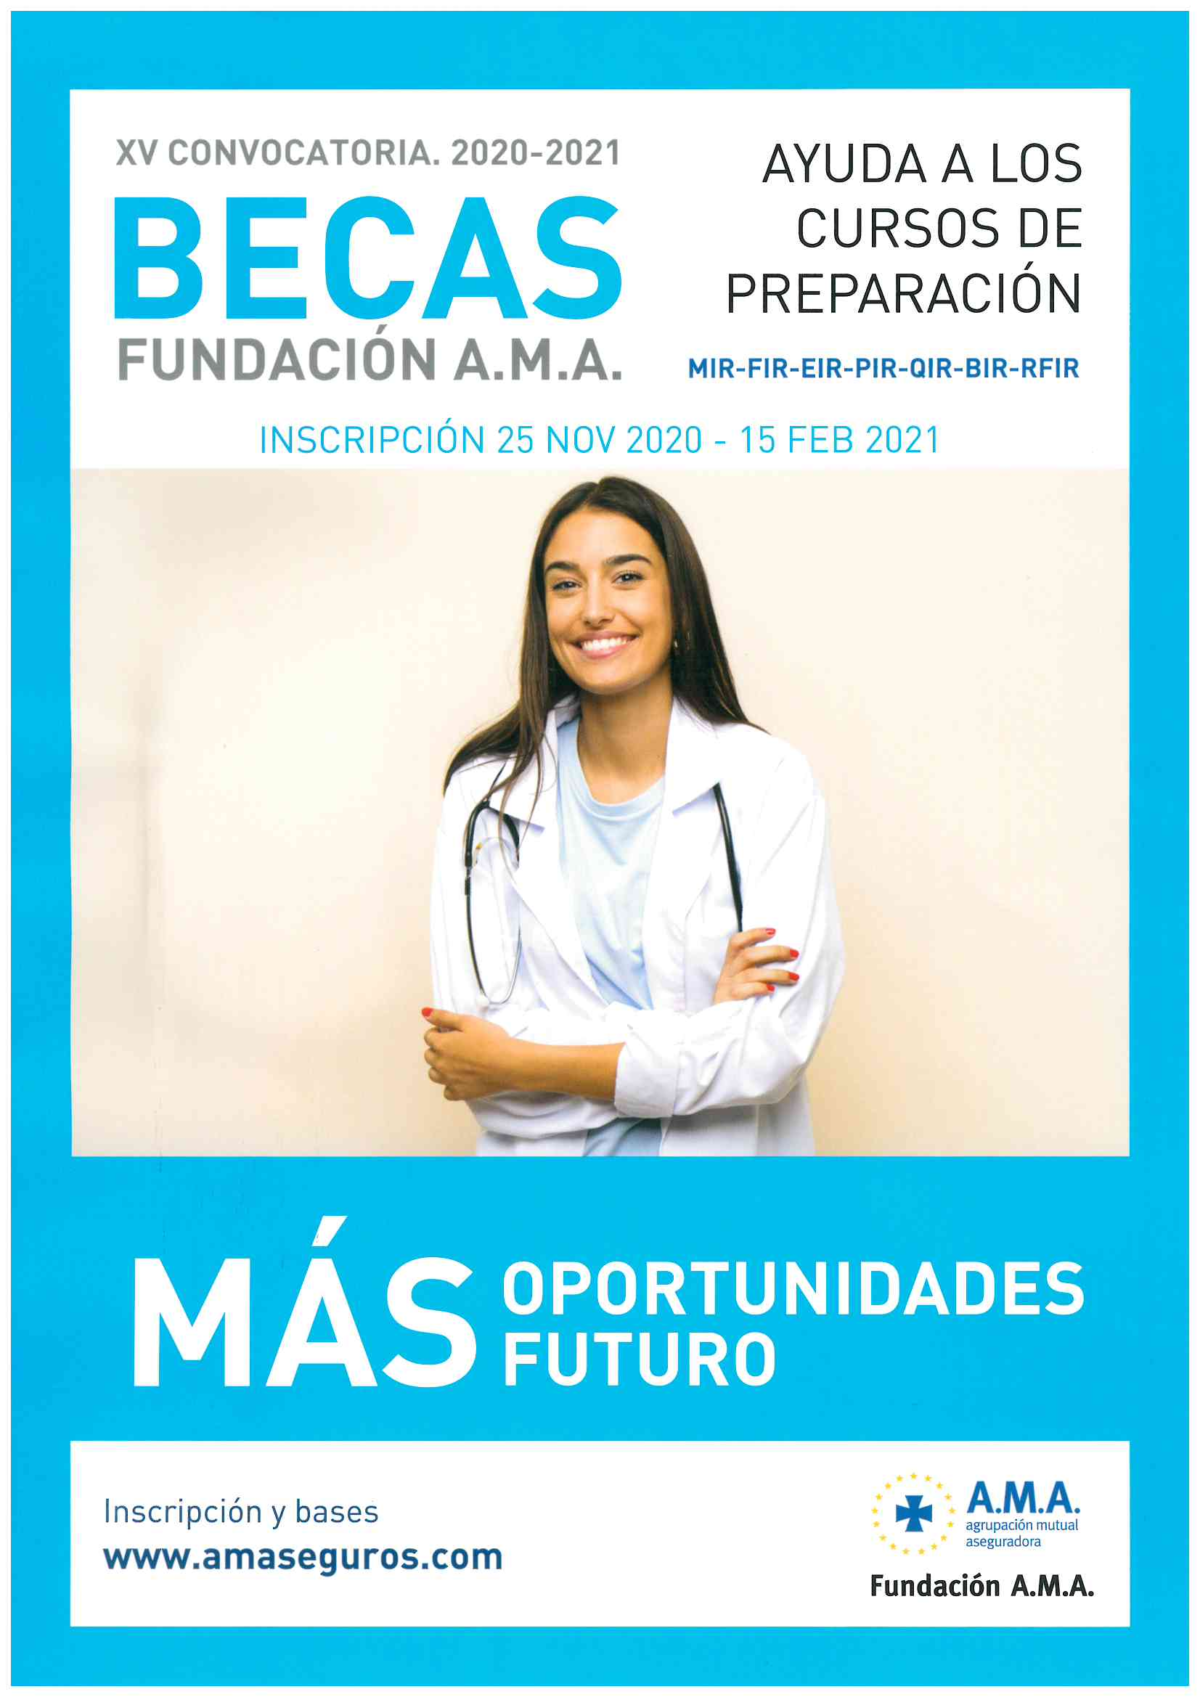 becas-fundacion-A.M.A.-1200x1697.png